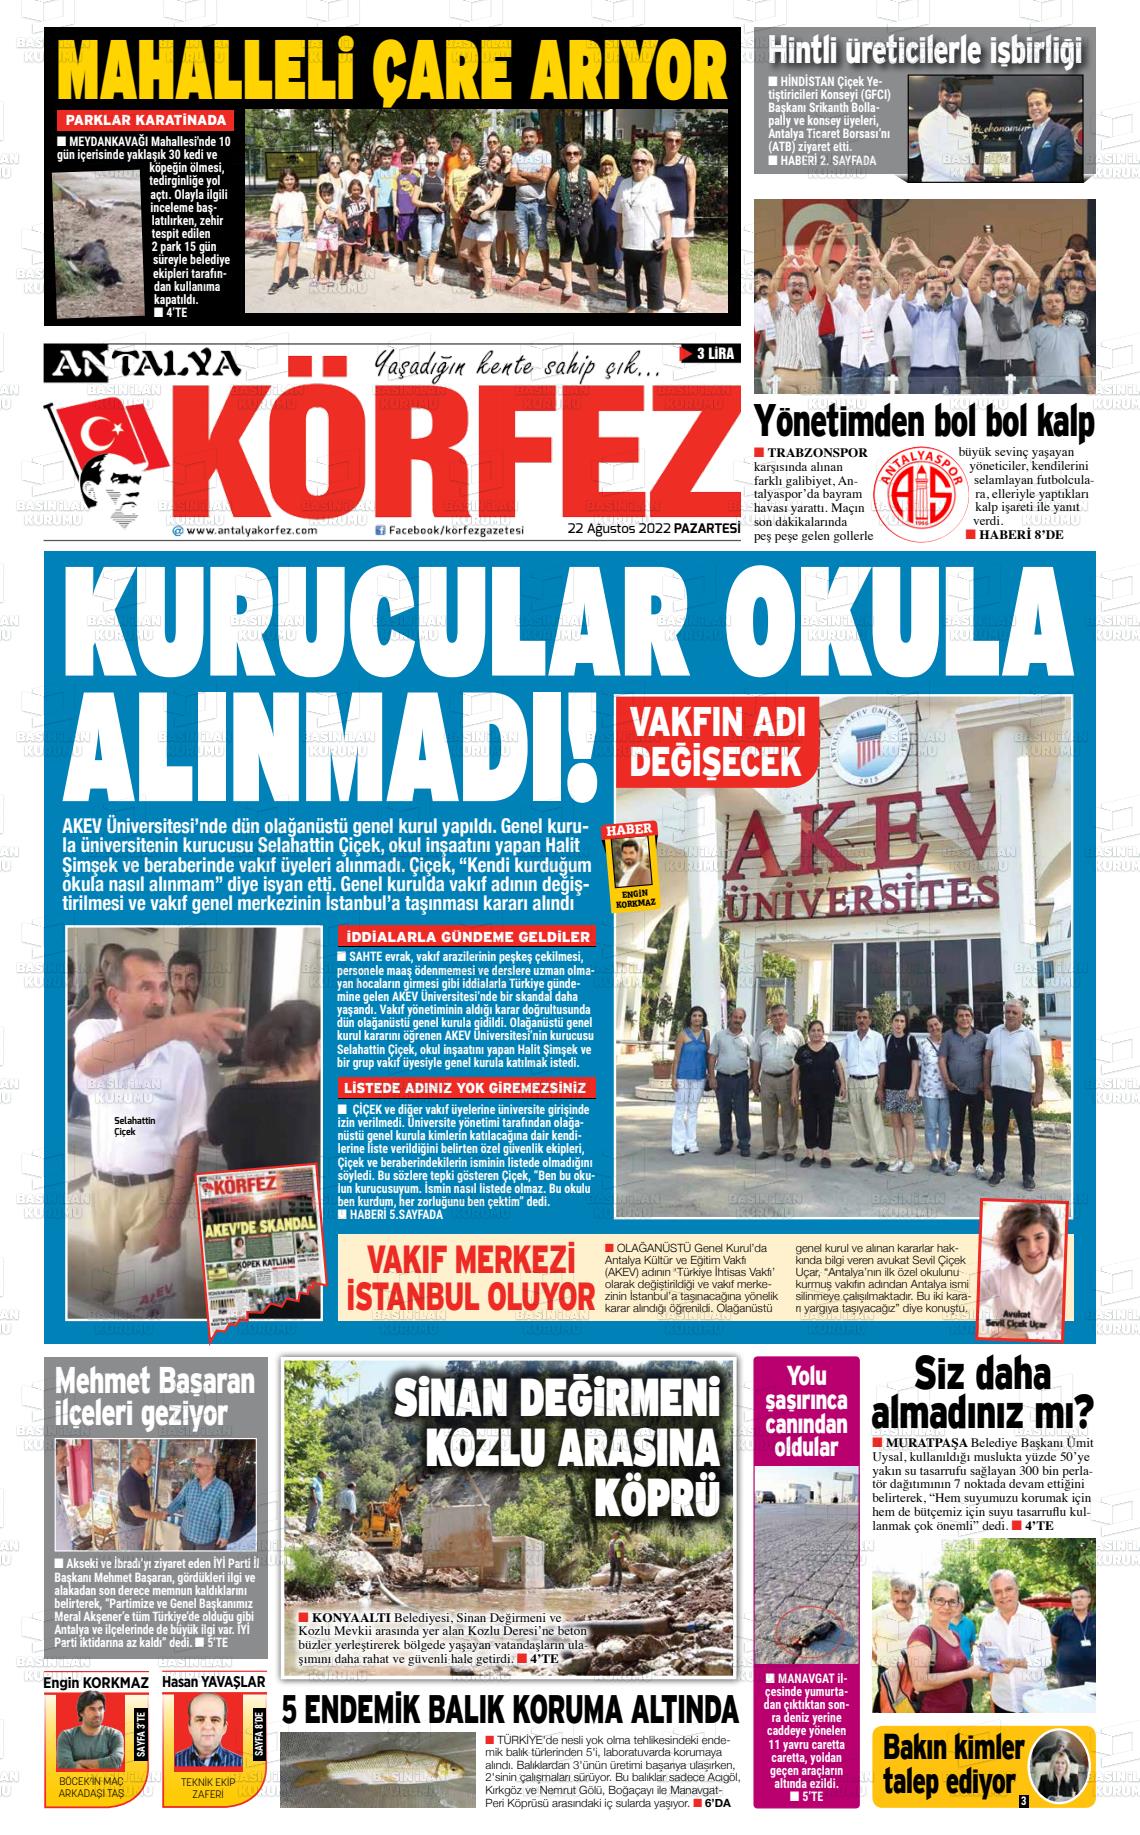 22 Ağustos 2022 Antalya Körfez Gazete Manşeti